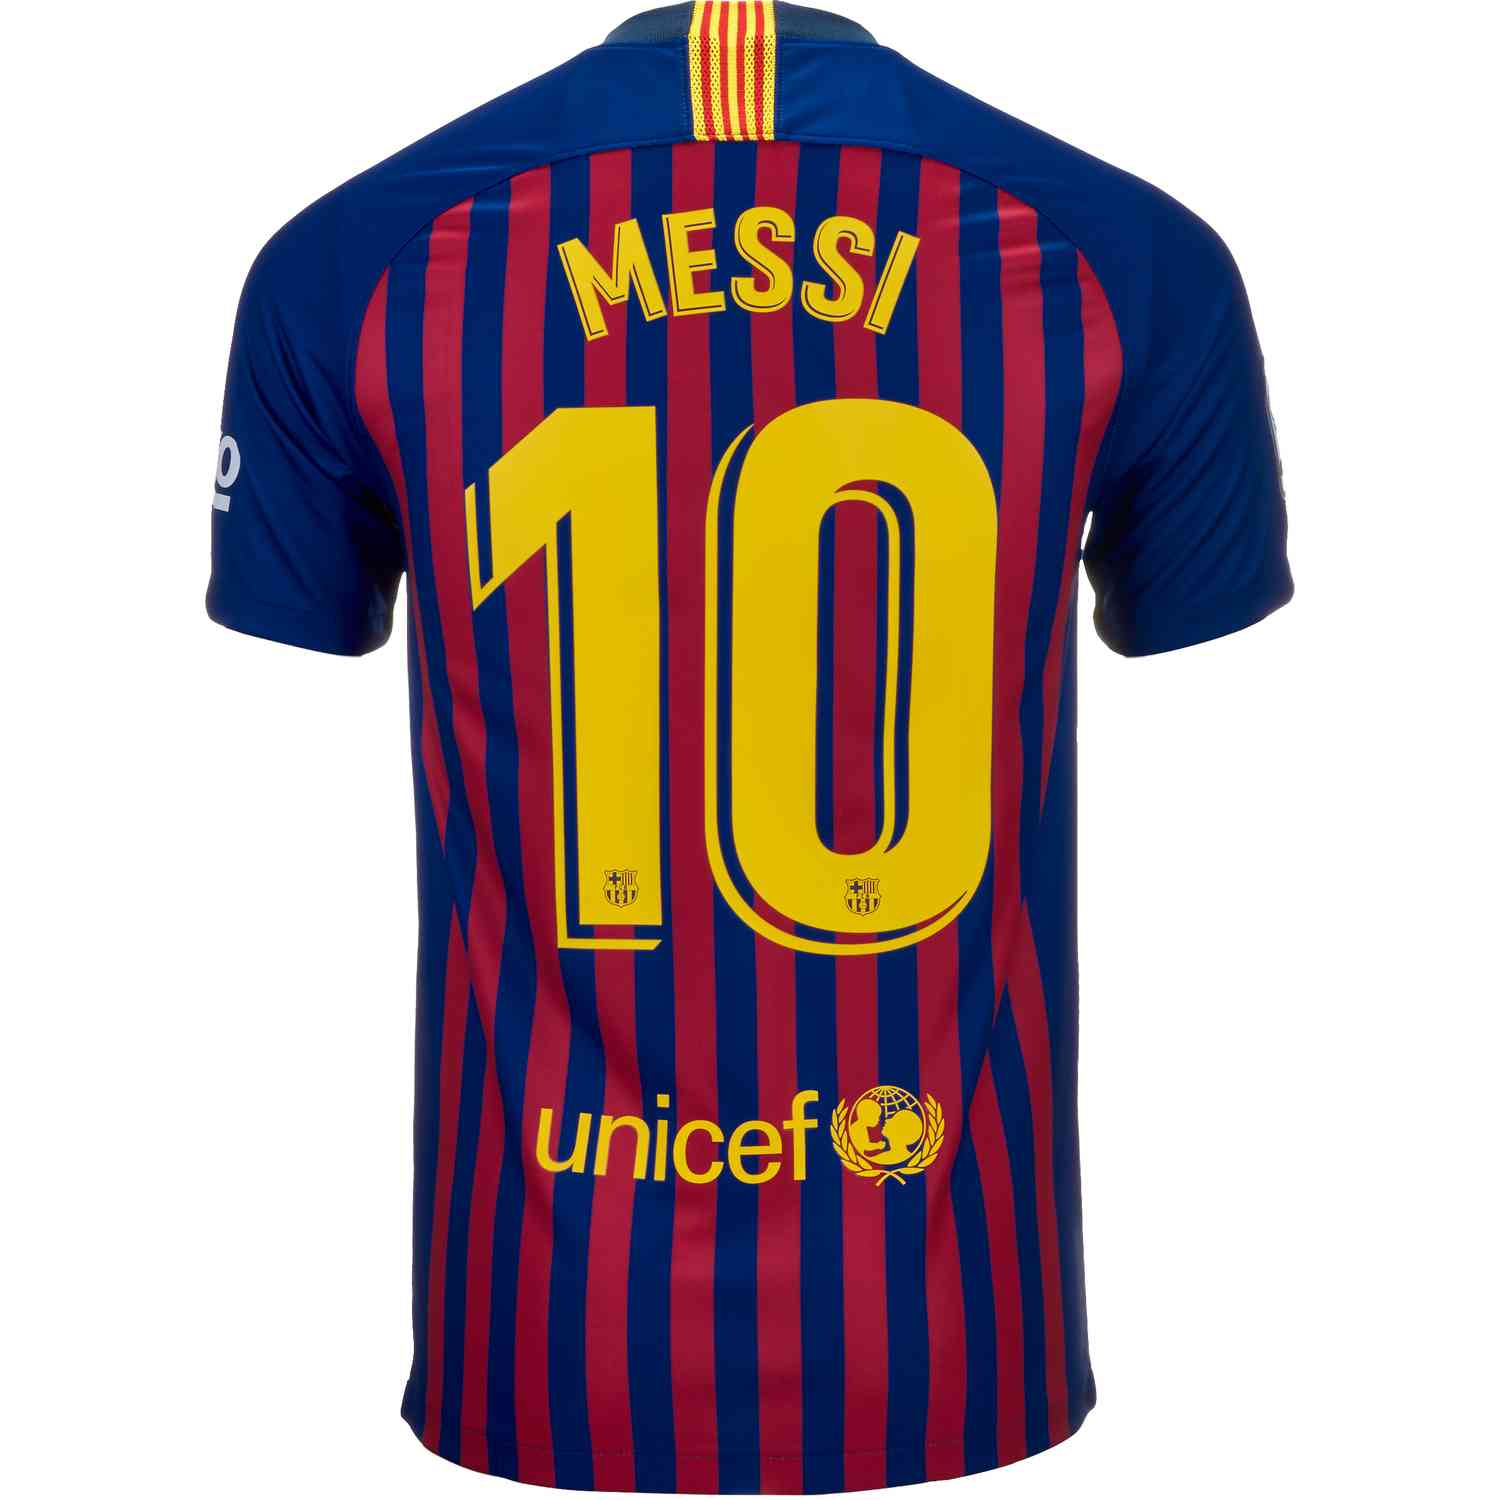 Bv6144 455 Nike Messi Barca Home Jsy Y 01 